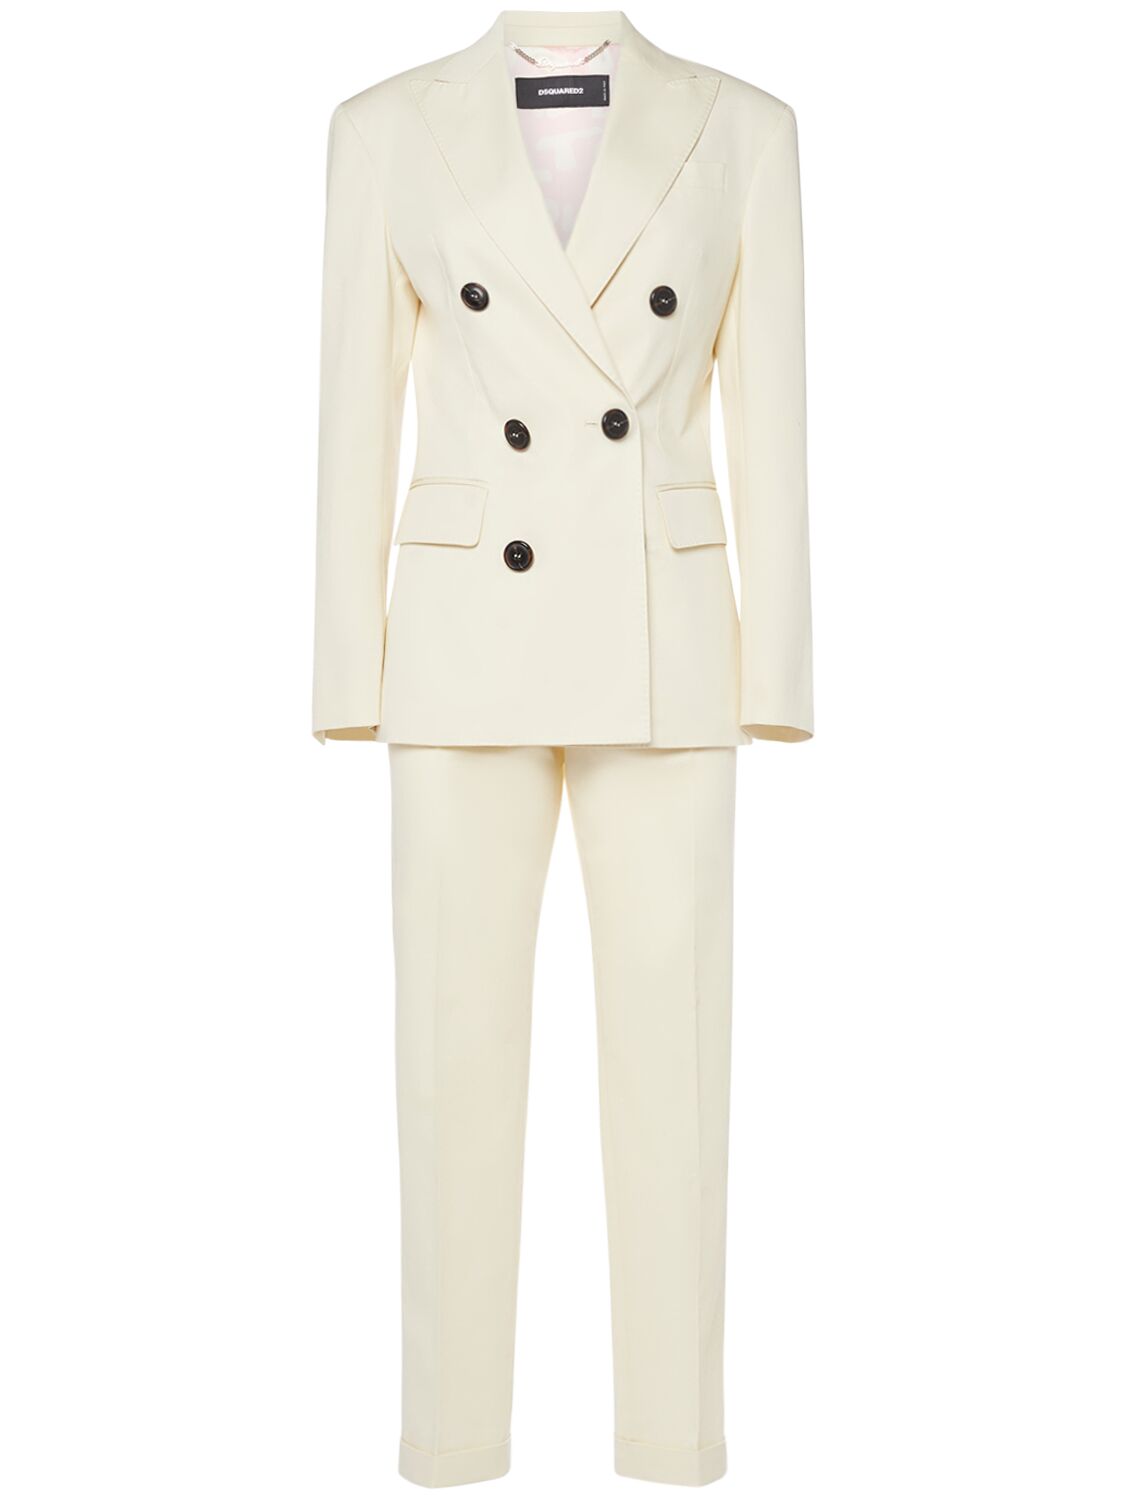 Cotton Twill Suit